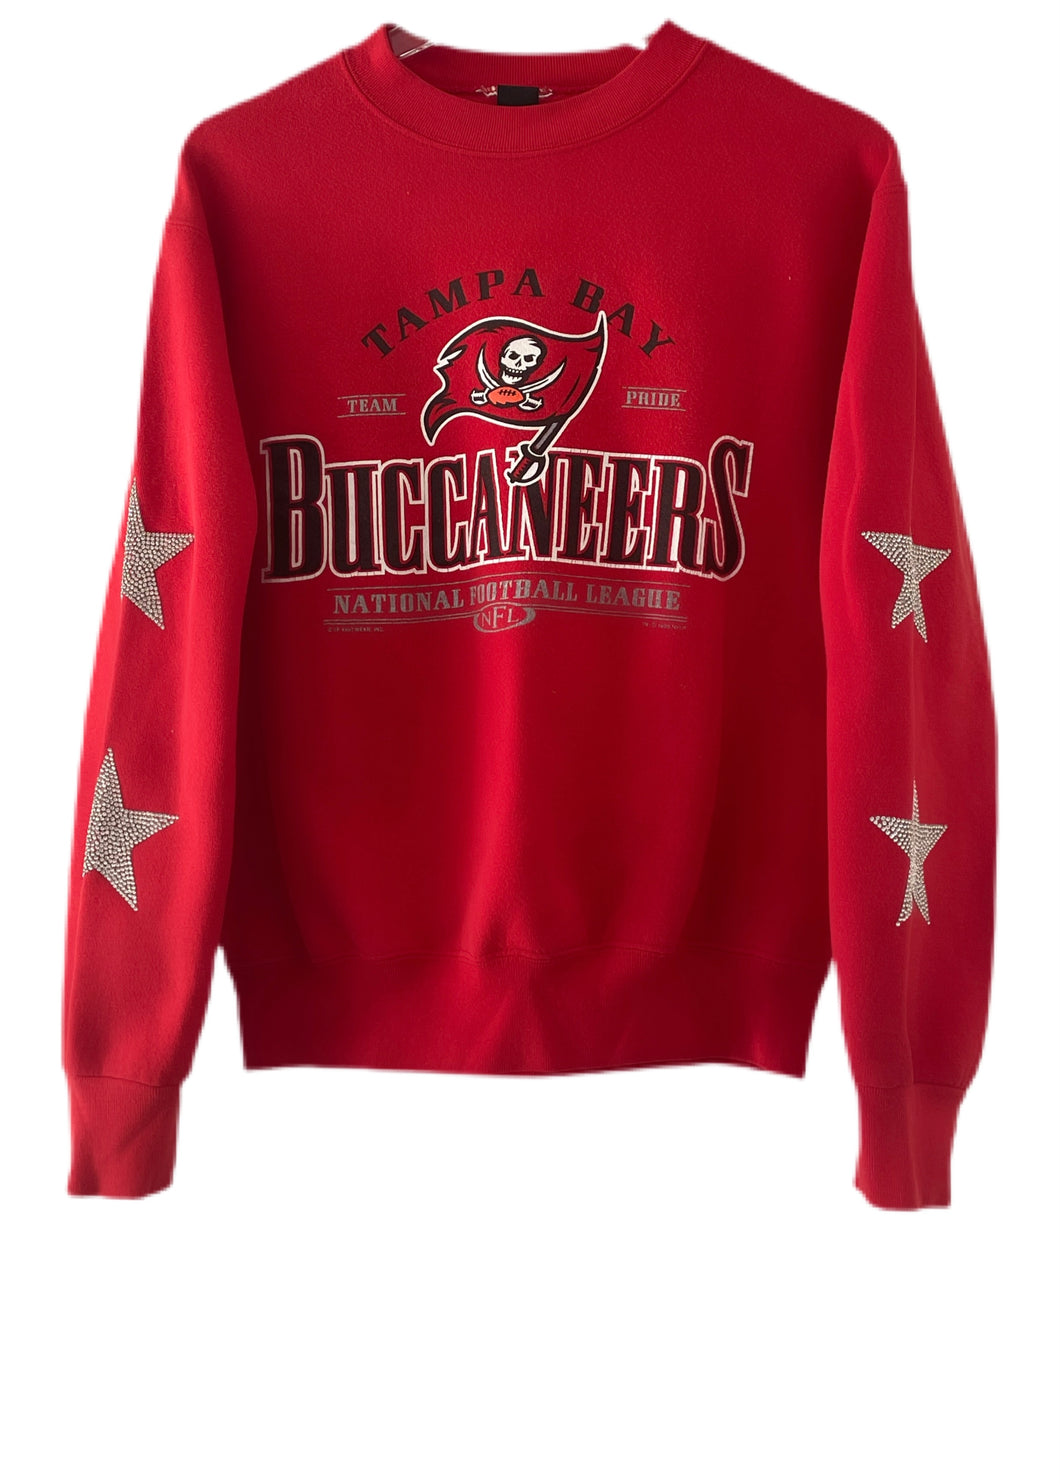 Tampa Bay Buccaneers, NFL One of a KIND Vintage Sweatshirt with Crystal Star Design